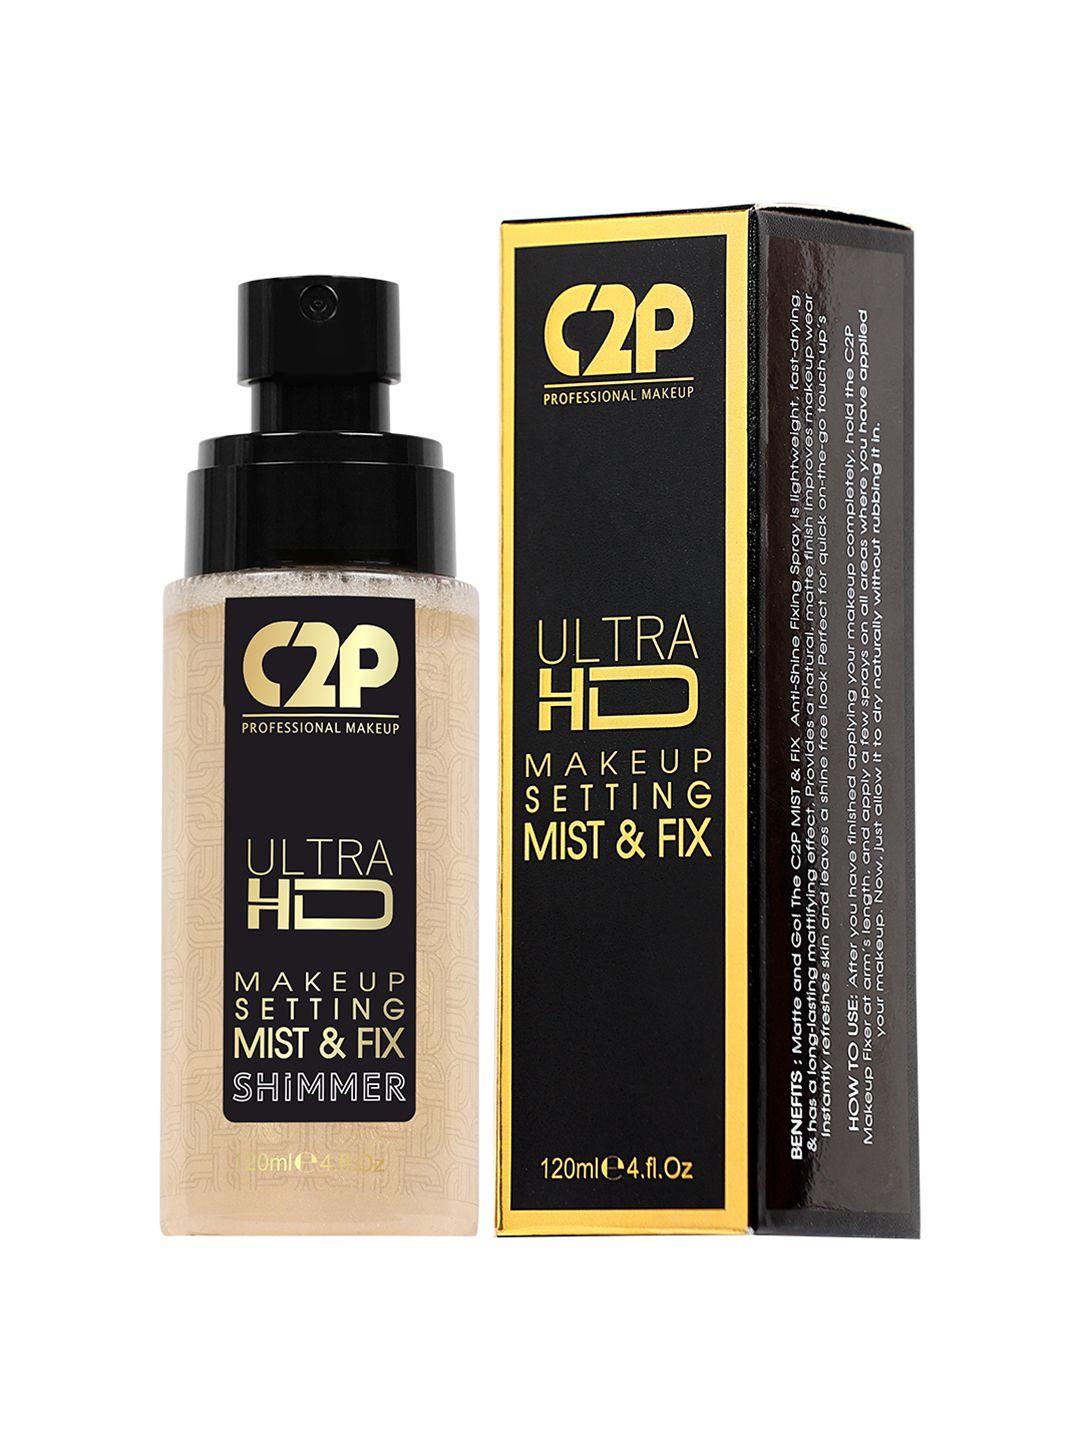 c2p professional makeup ultra hd makeup setting mist & fix - shimmer - champagne 04